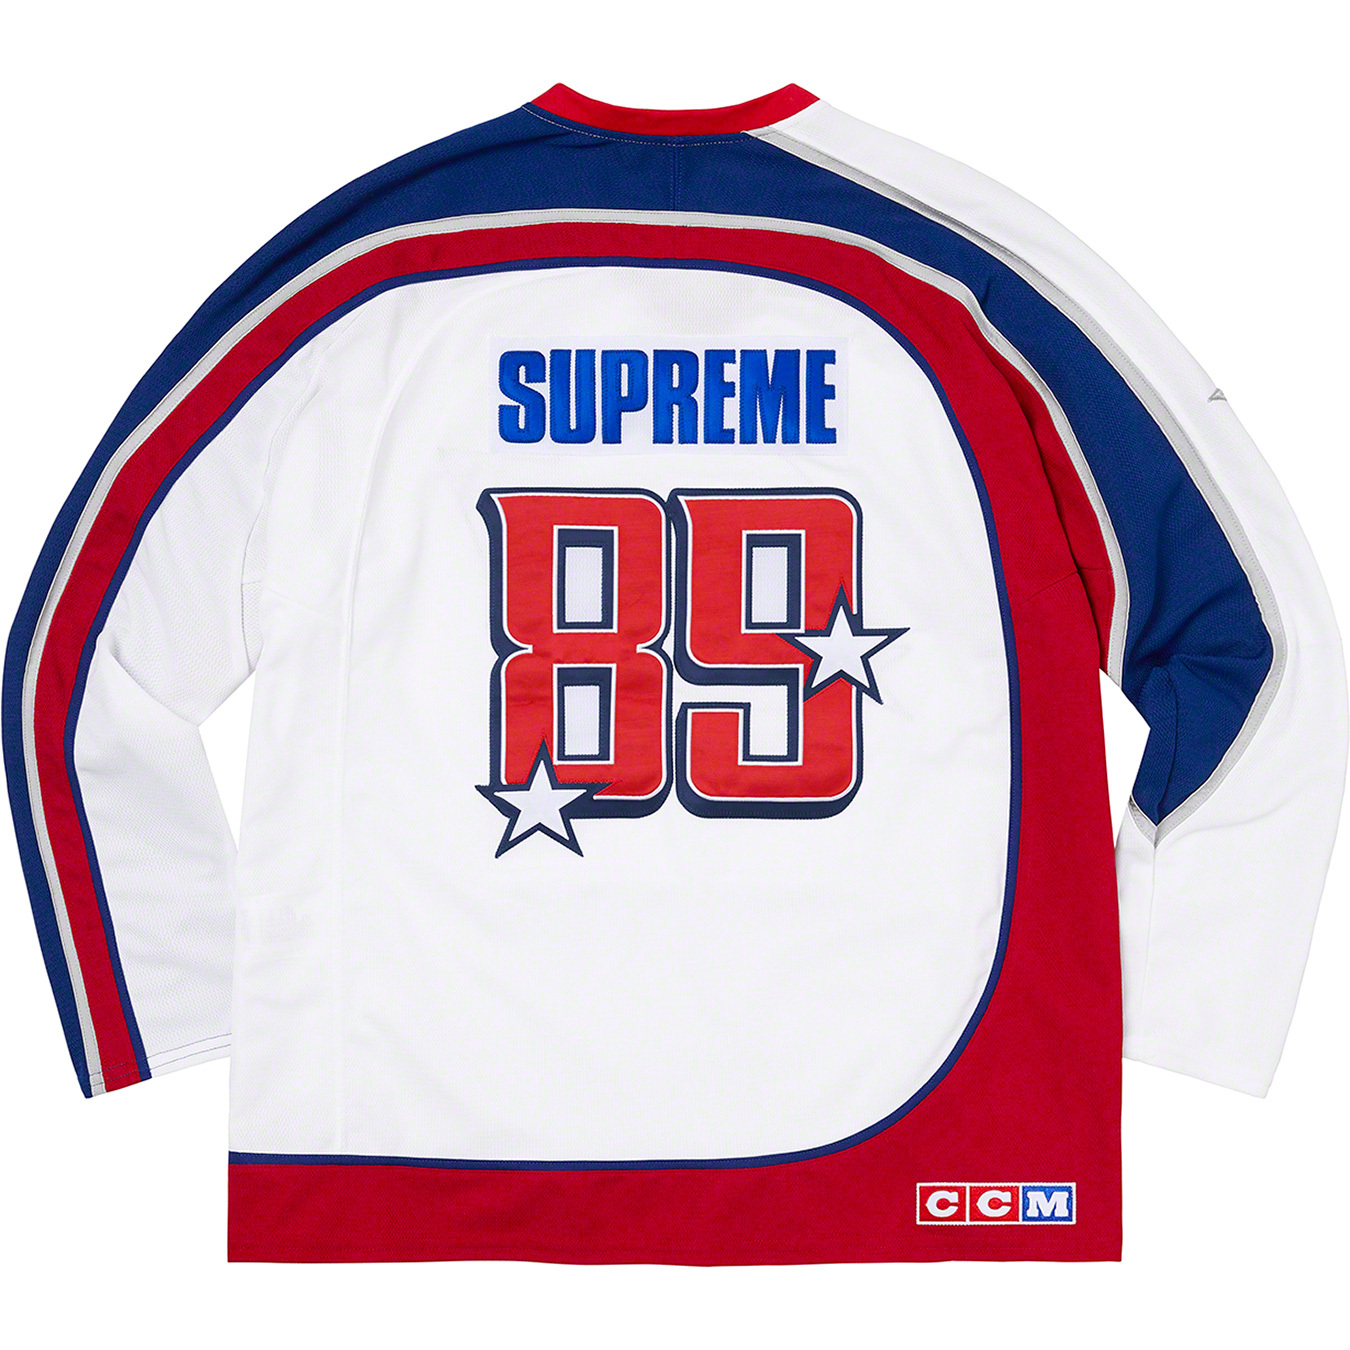 Supreme®/CCM® All Stars Hockey Jersey | Supreme 22fw